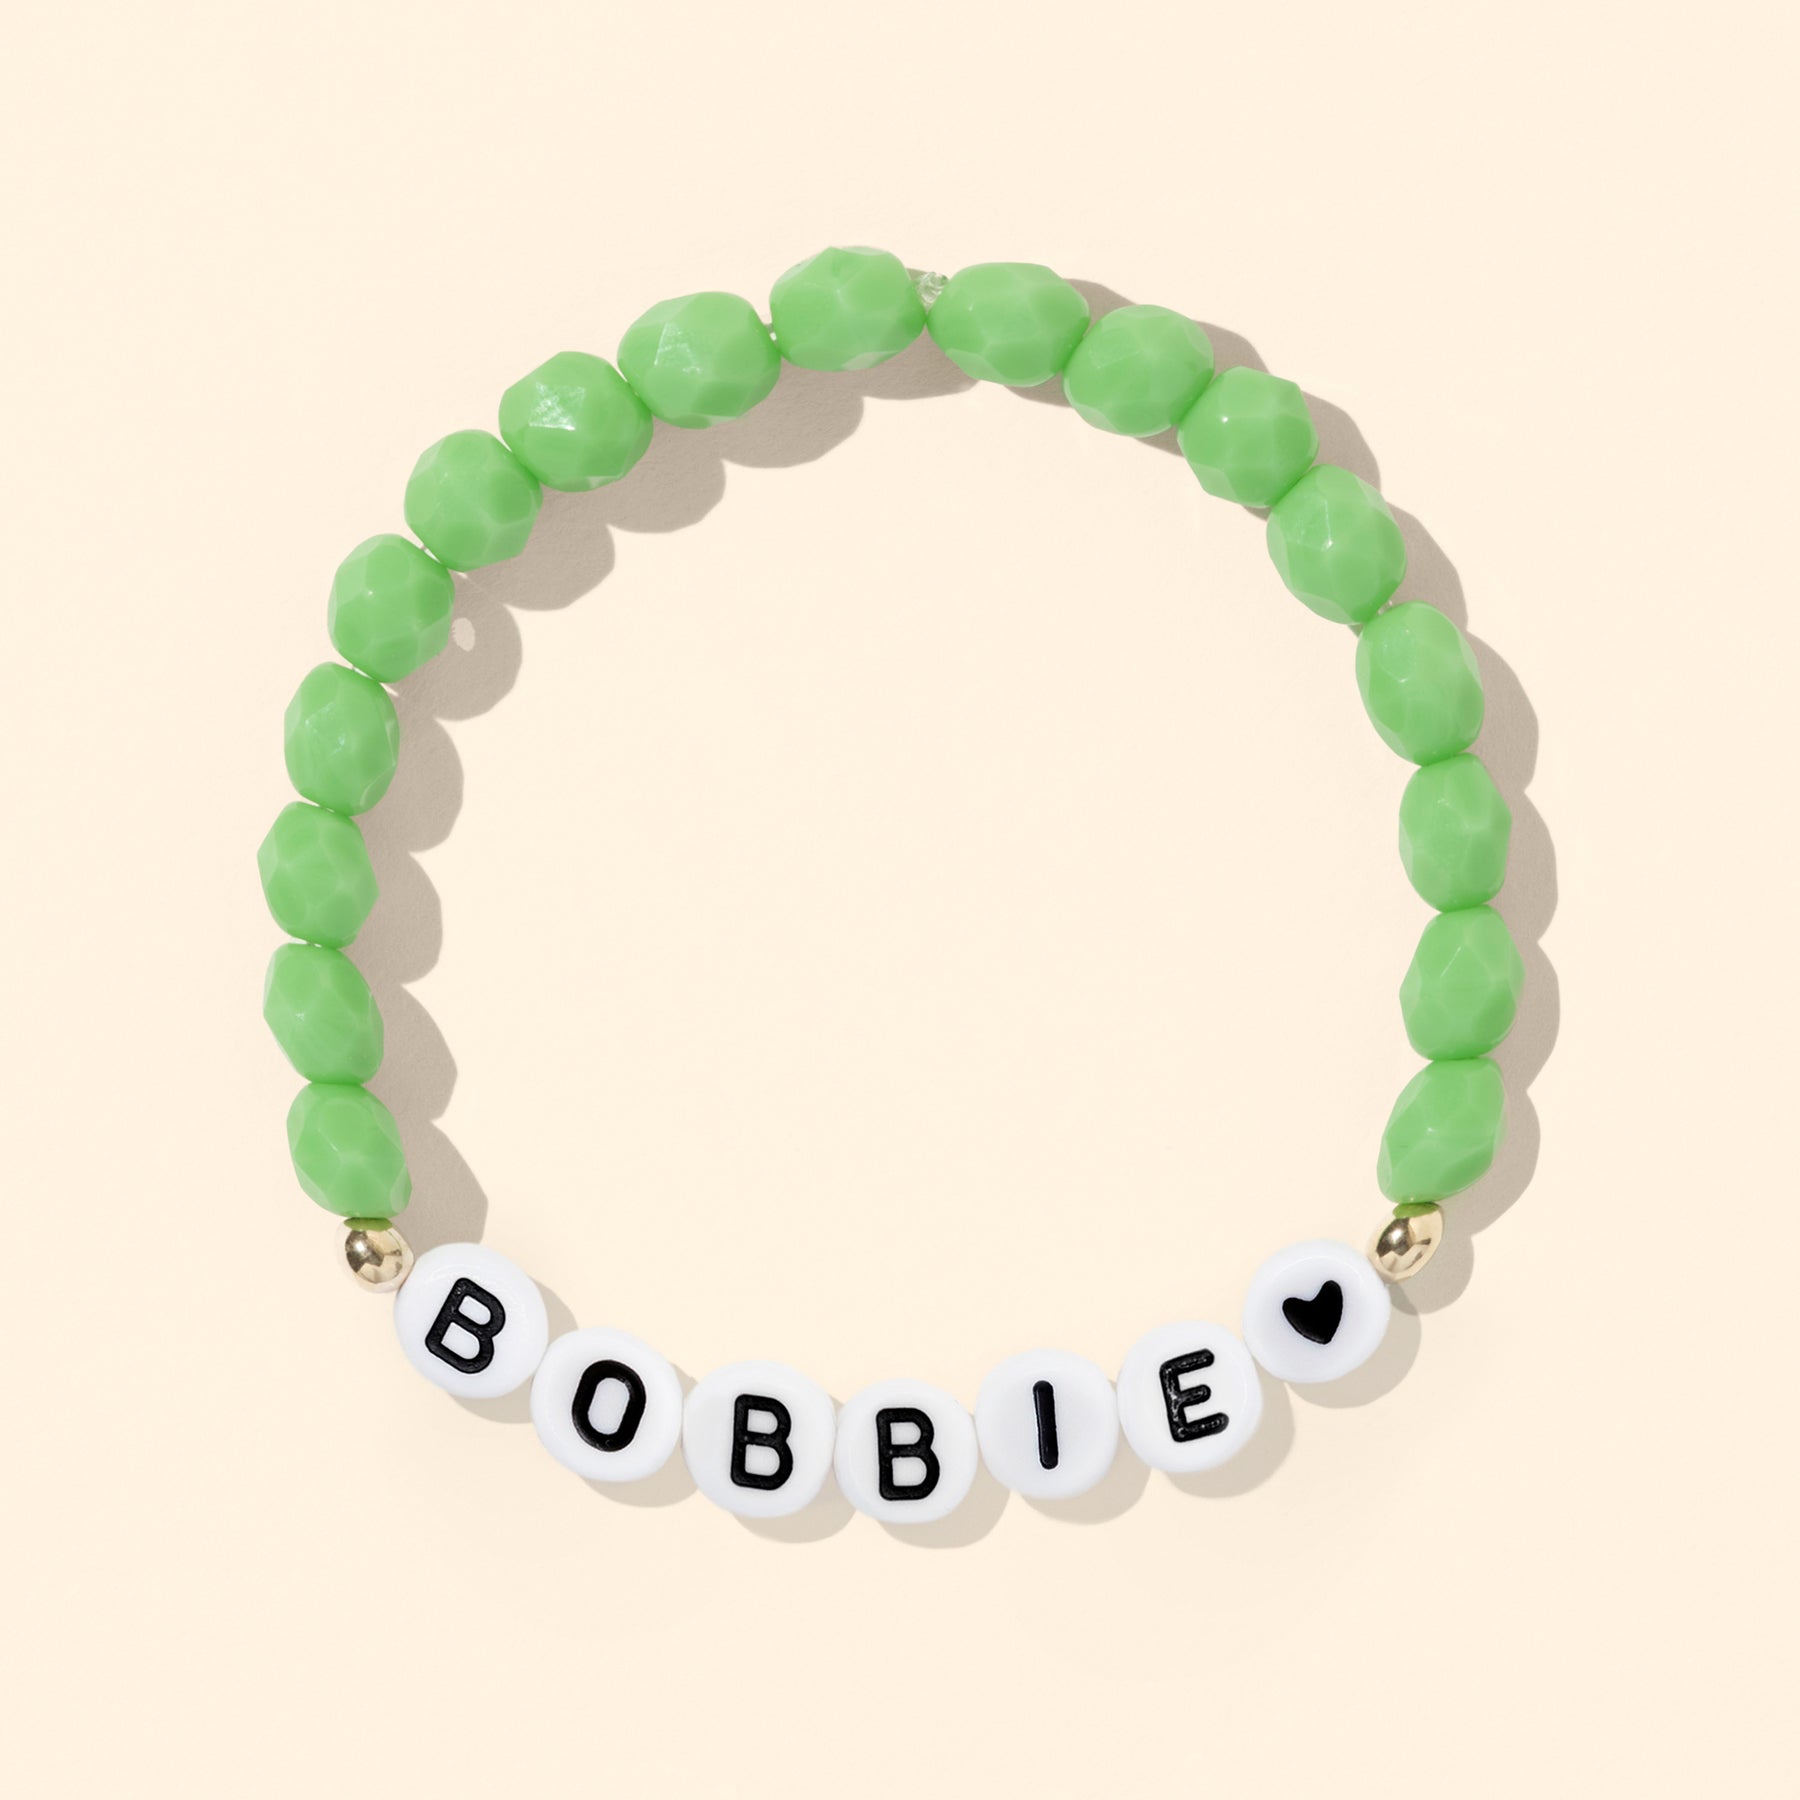 The Bobbie Bracelet